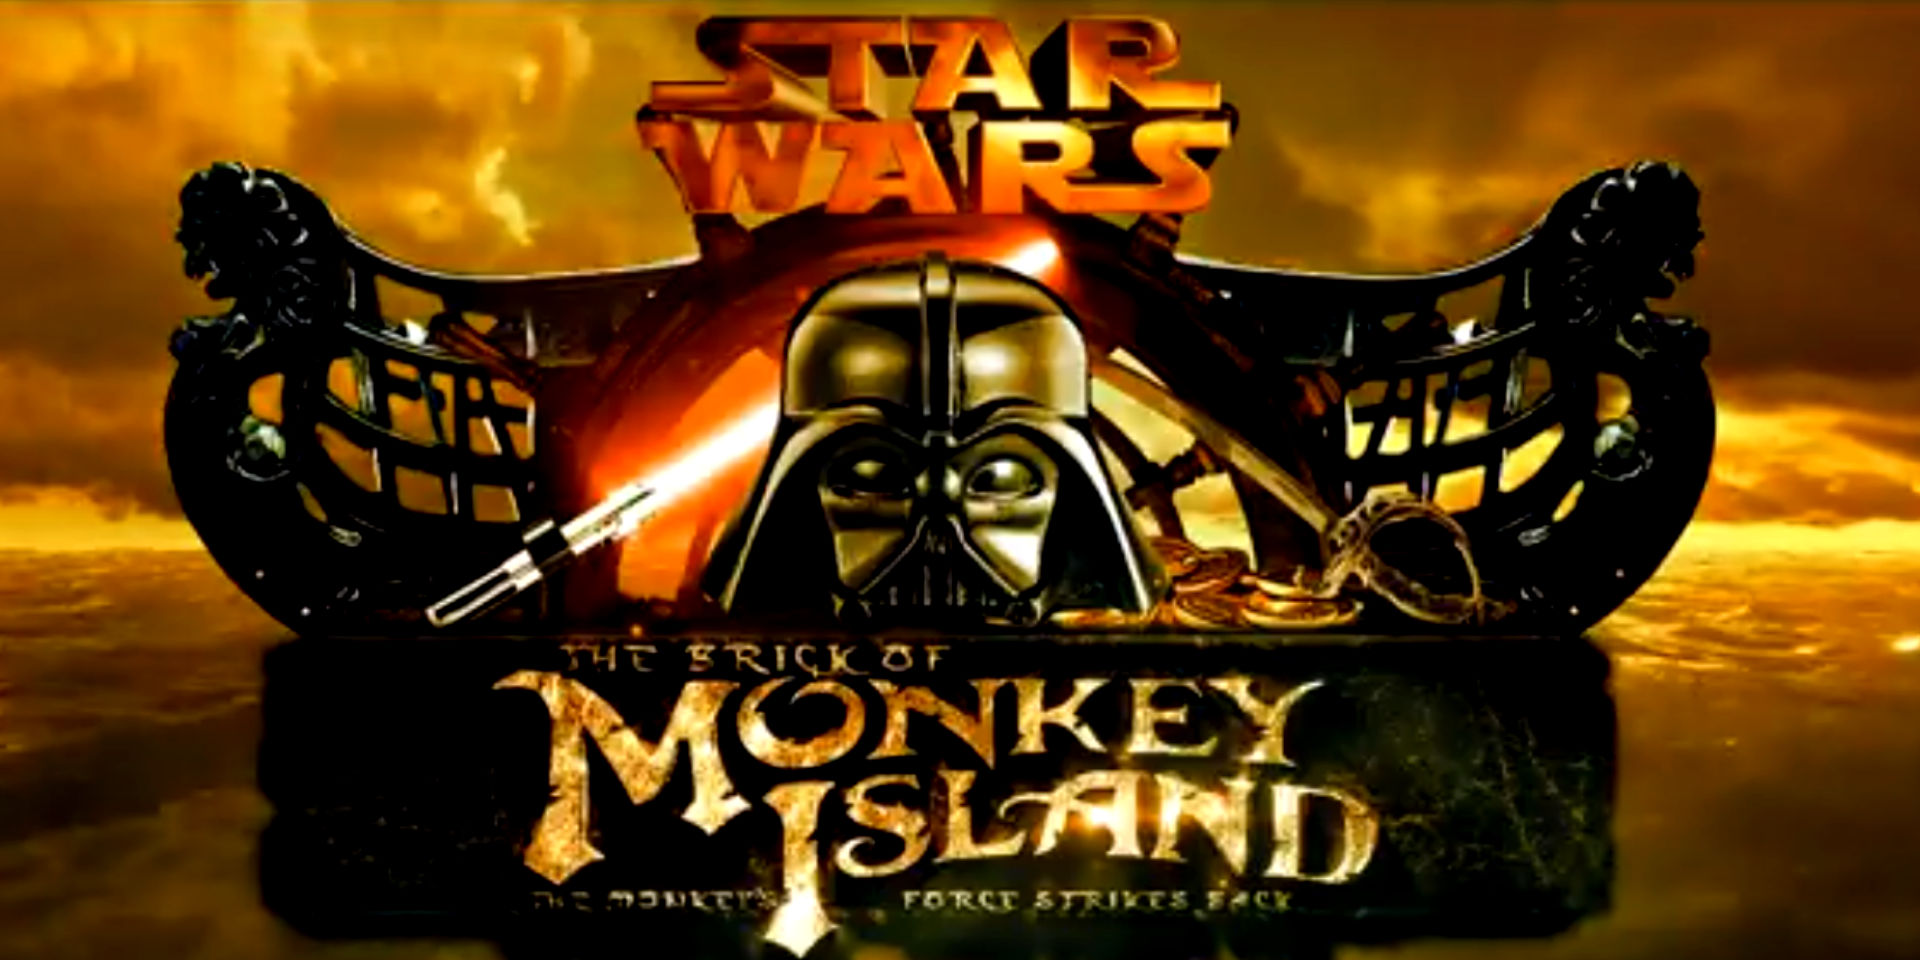 Star Wars – The Brick of Monkey Island